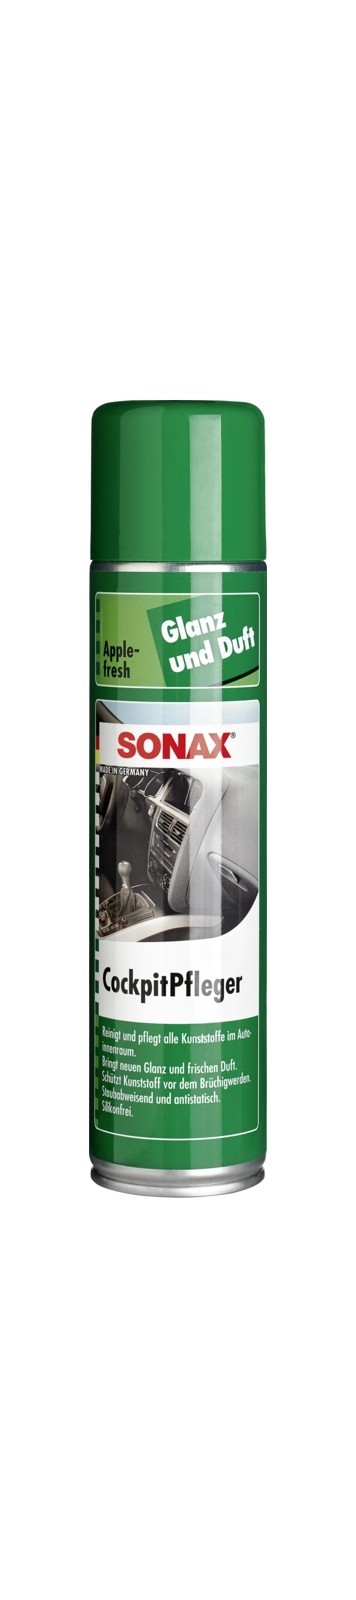 SONAX Cockpit-Pfleger Apple-fresh (400 ml), Art.-Nr. 03443000